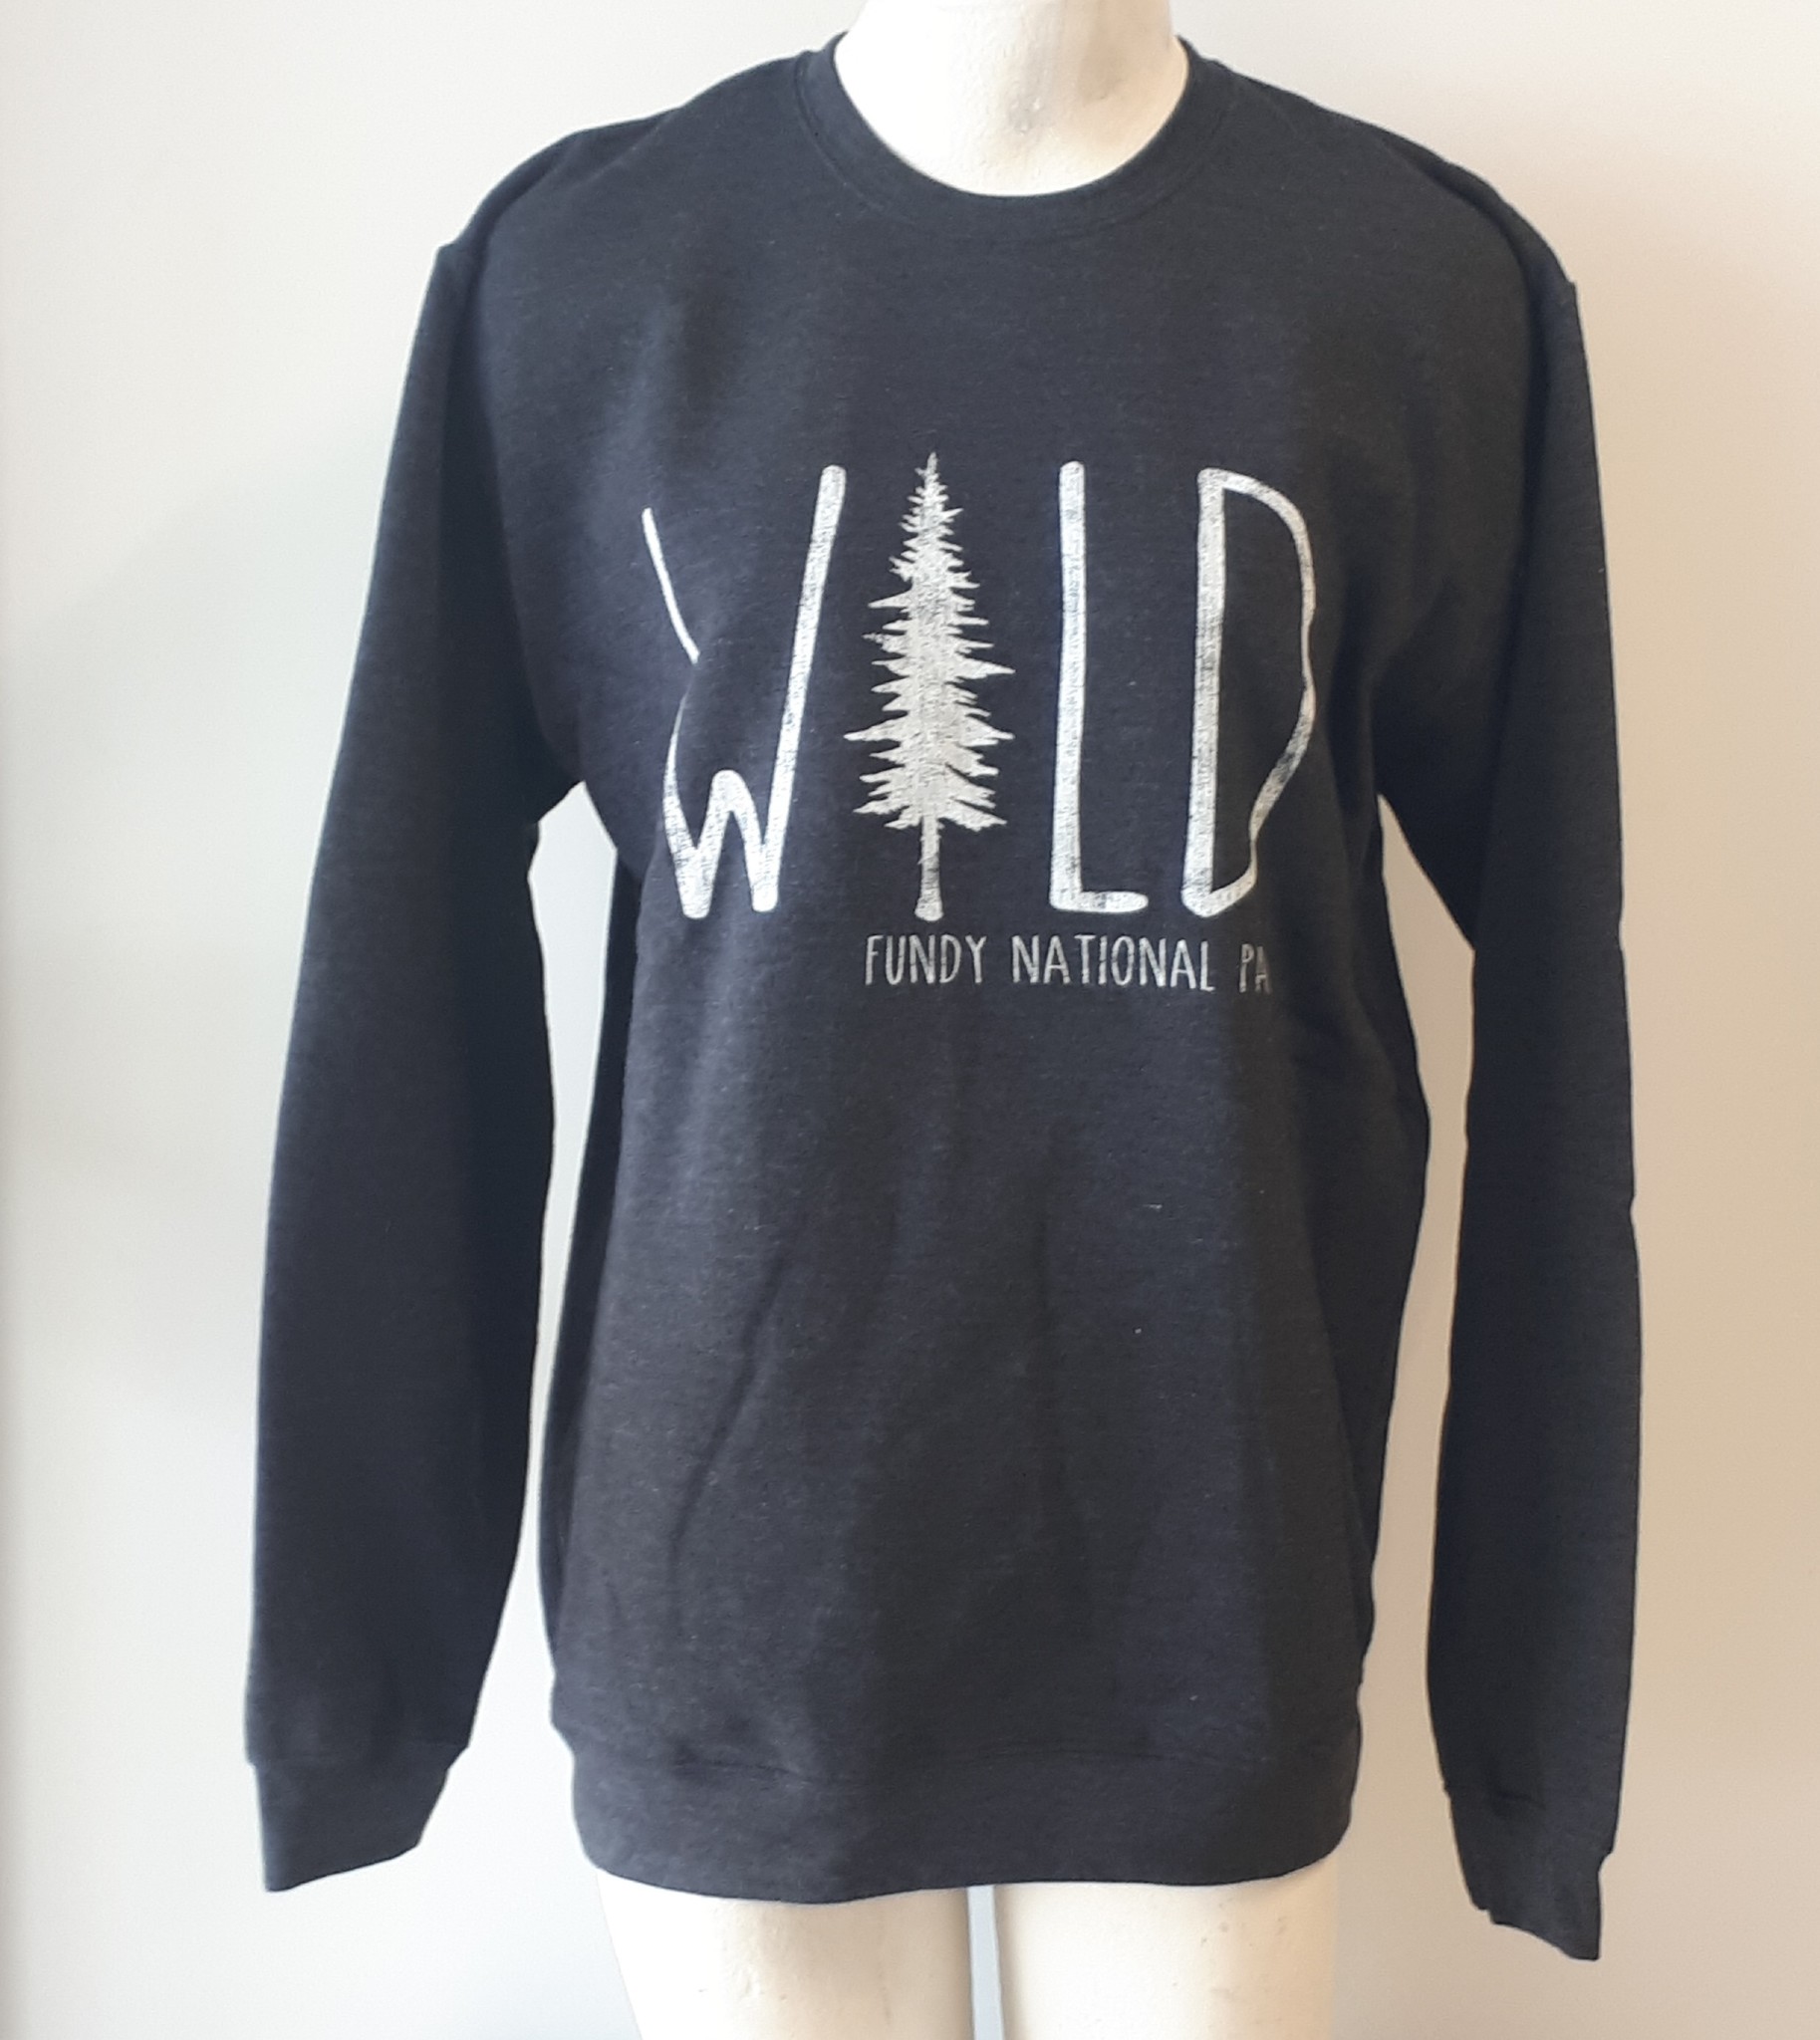 Sweatshirt Wild Pine